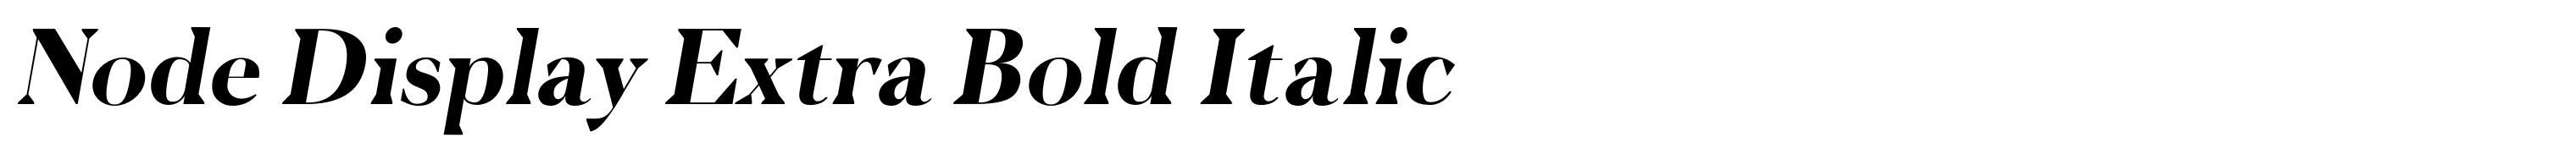 Node Display Extra Bold Italic